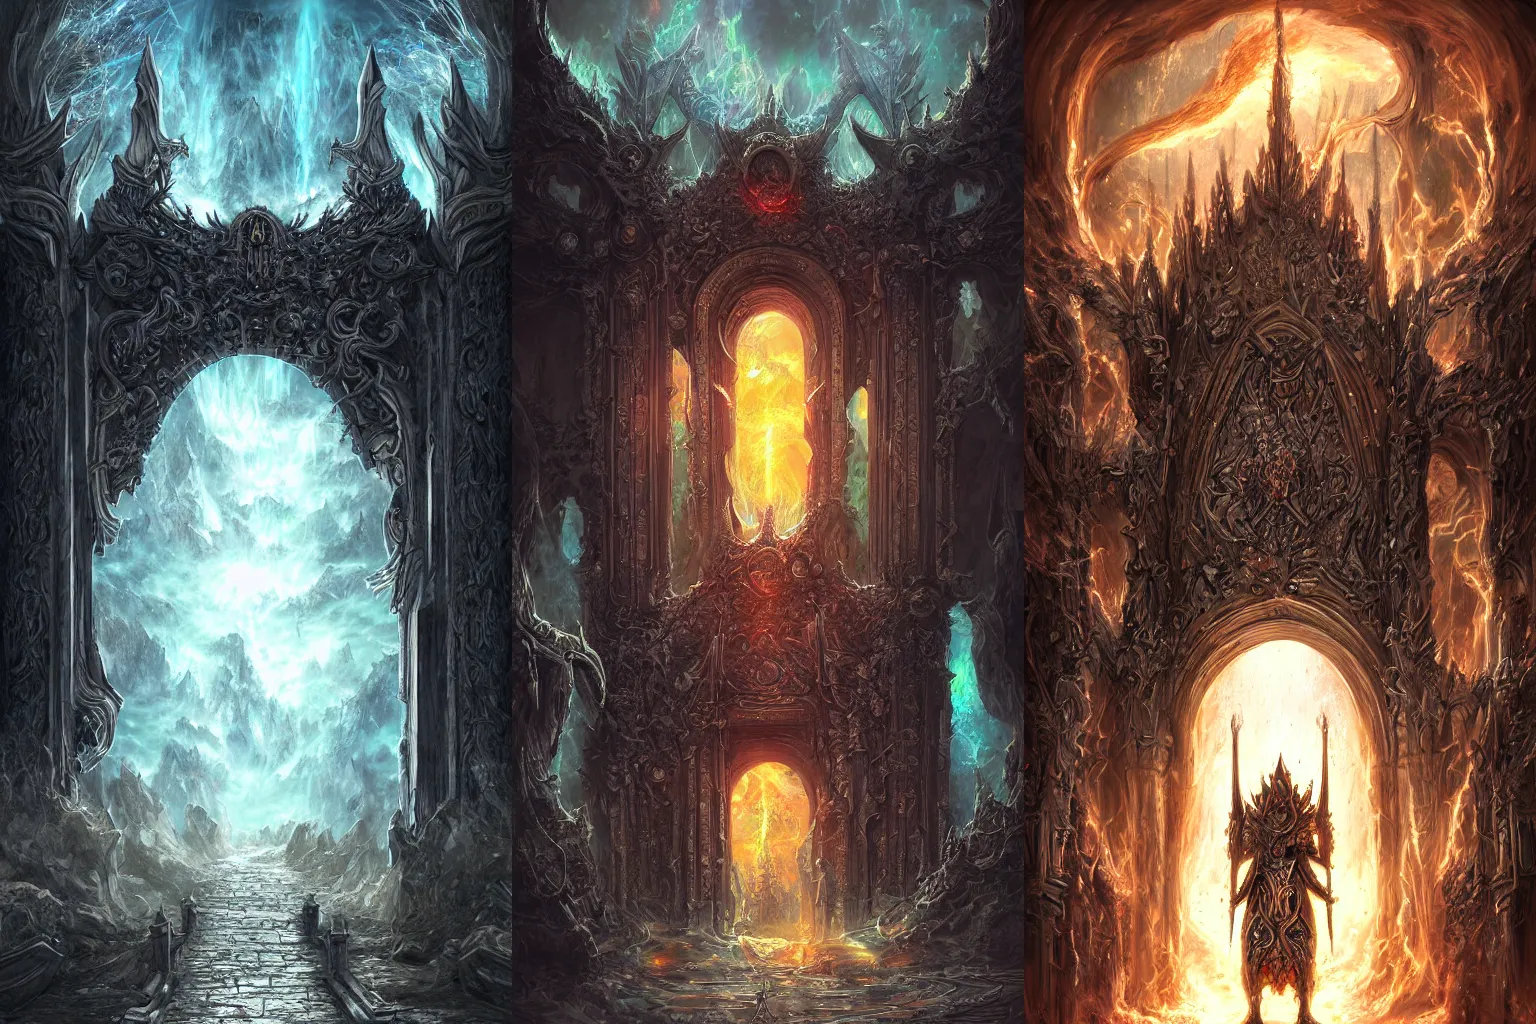 Prompt: The gate to the eternal kingdom of Destruction, fantasy, digital art, HD, detailed.